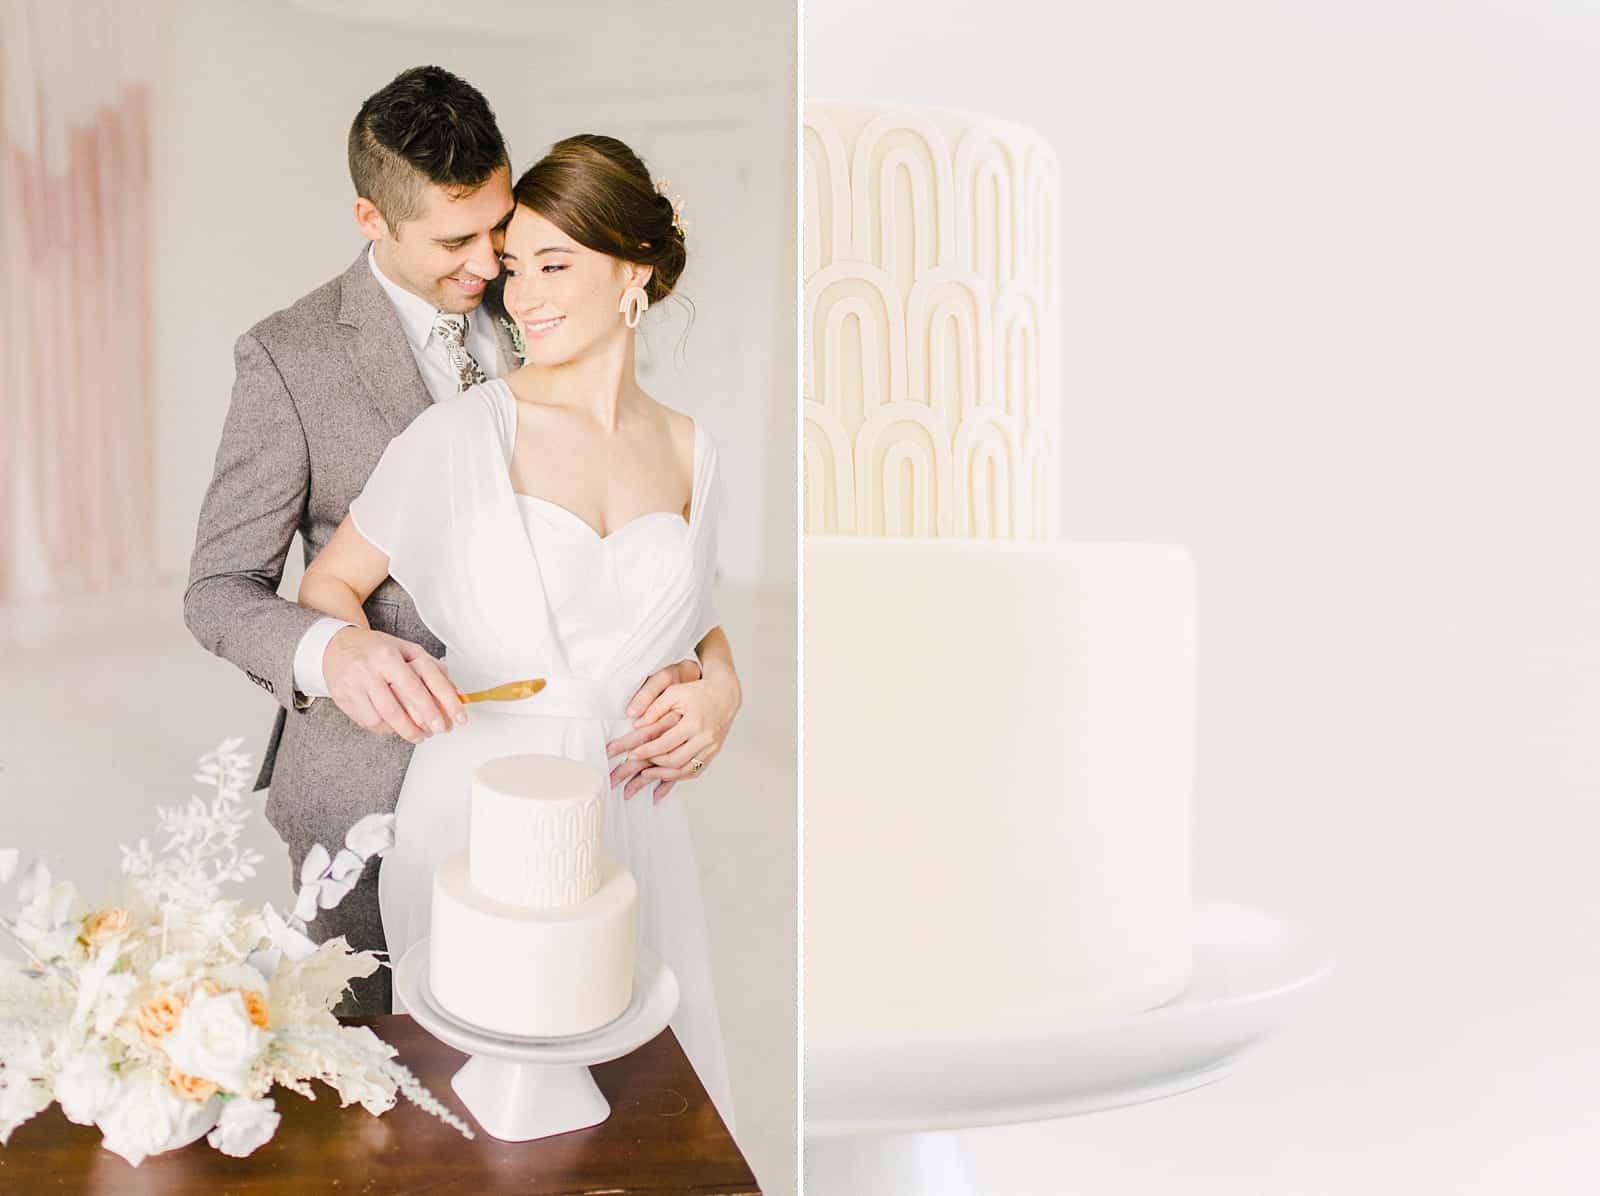 Bride and groom cut the cake, Modern minimalist white wedding cake with geometric design